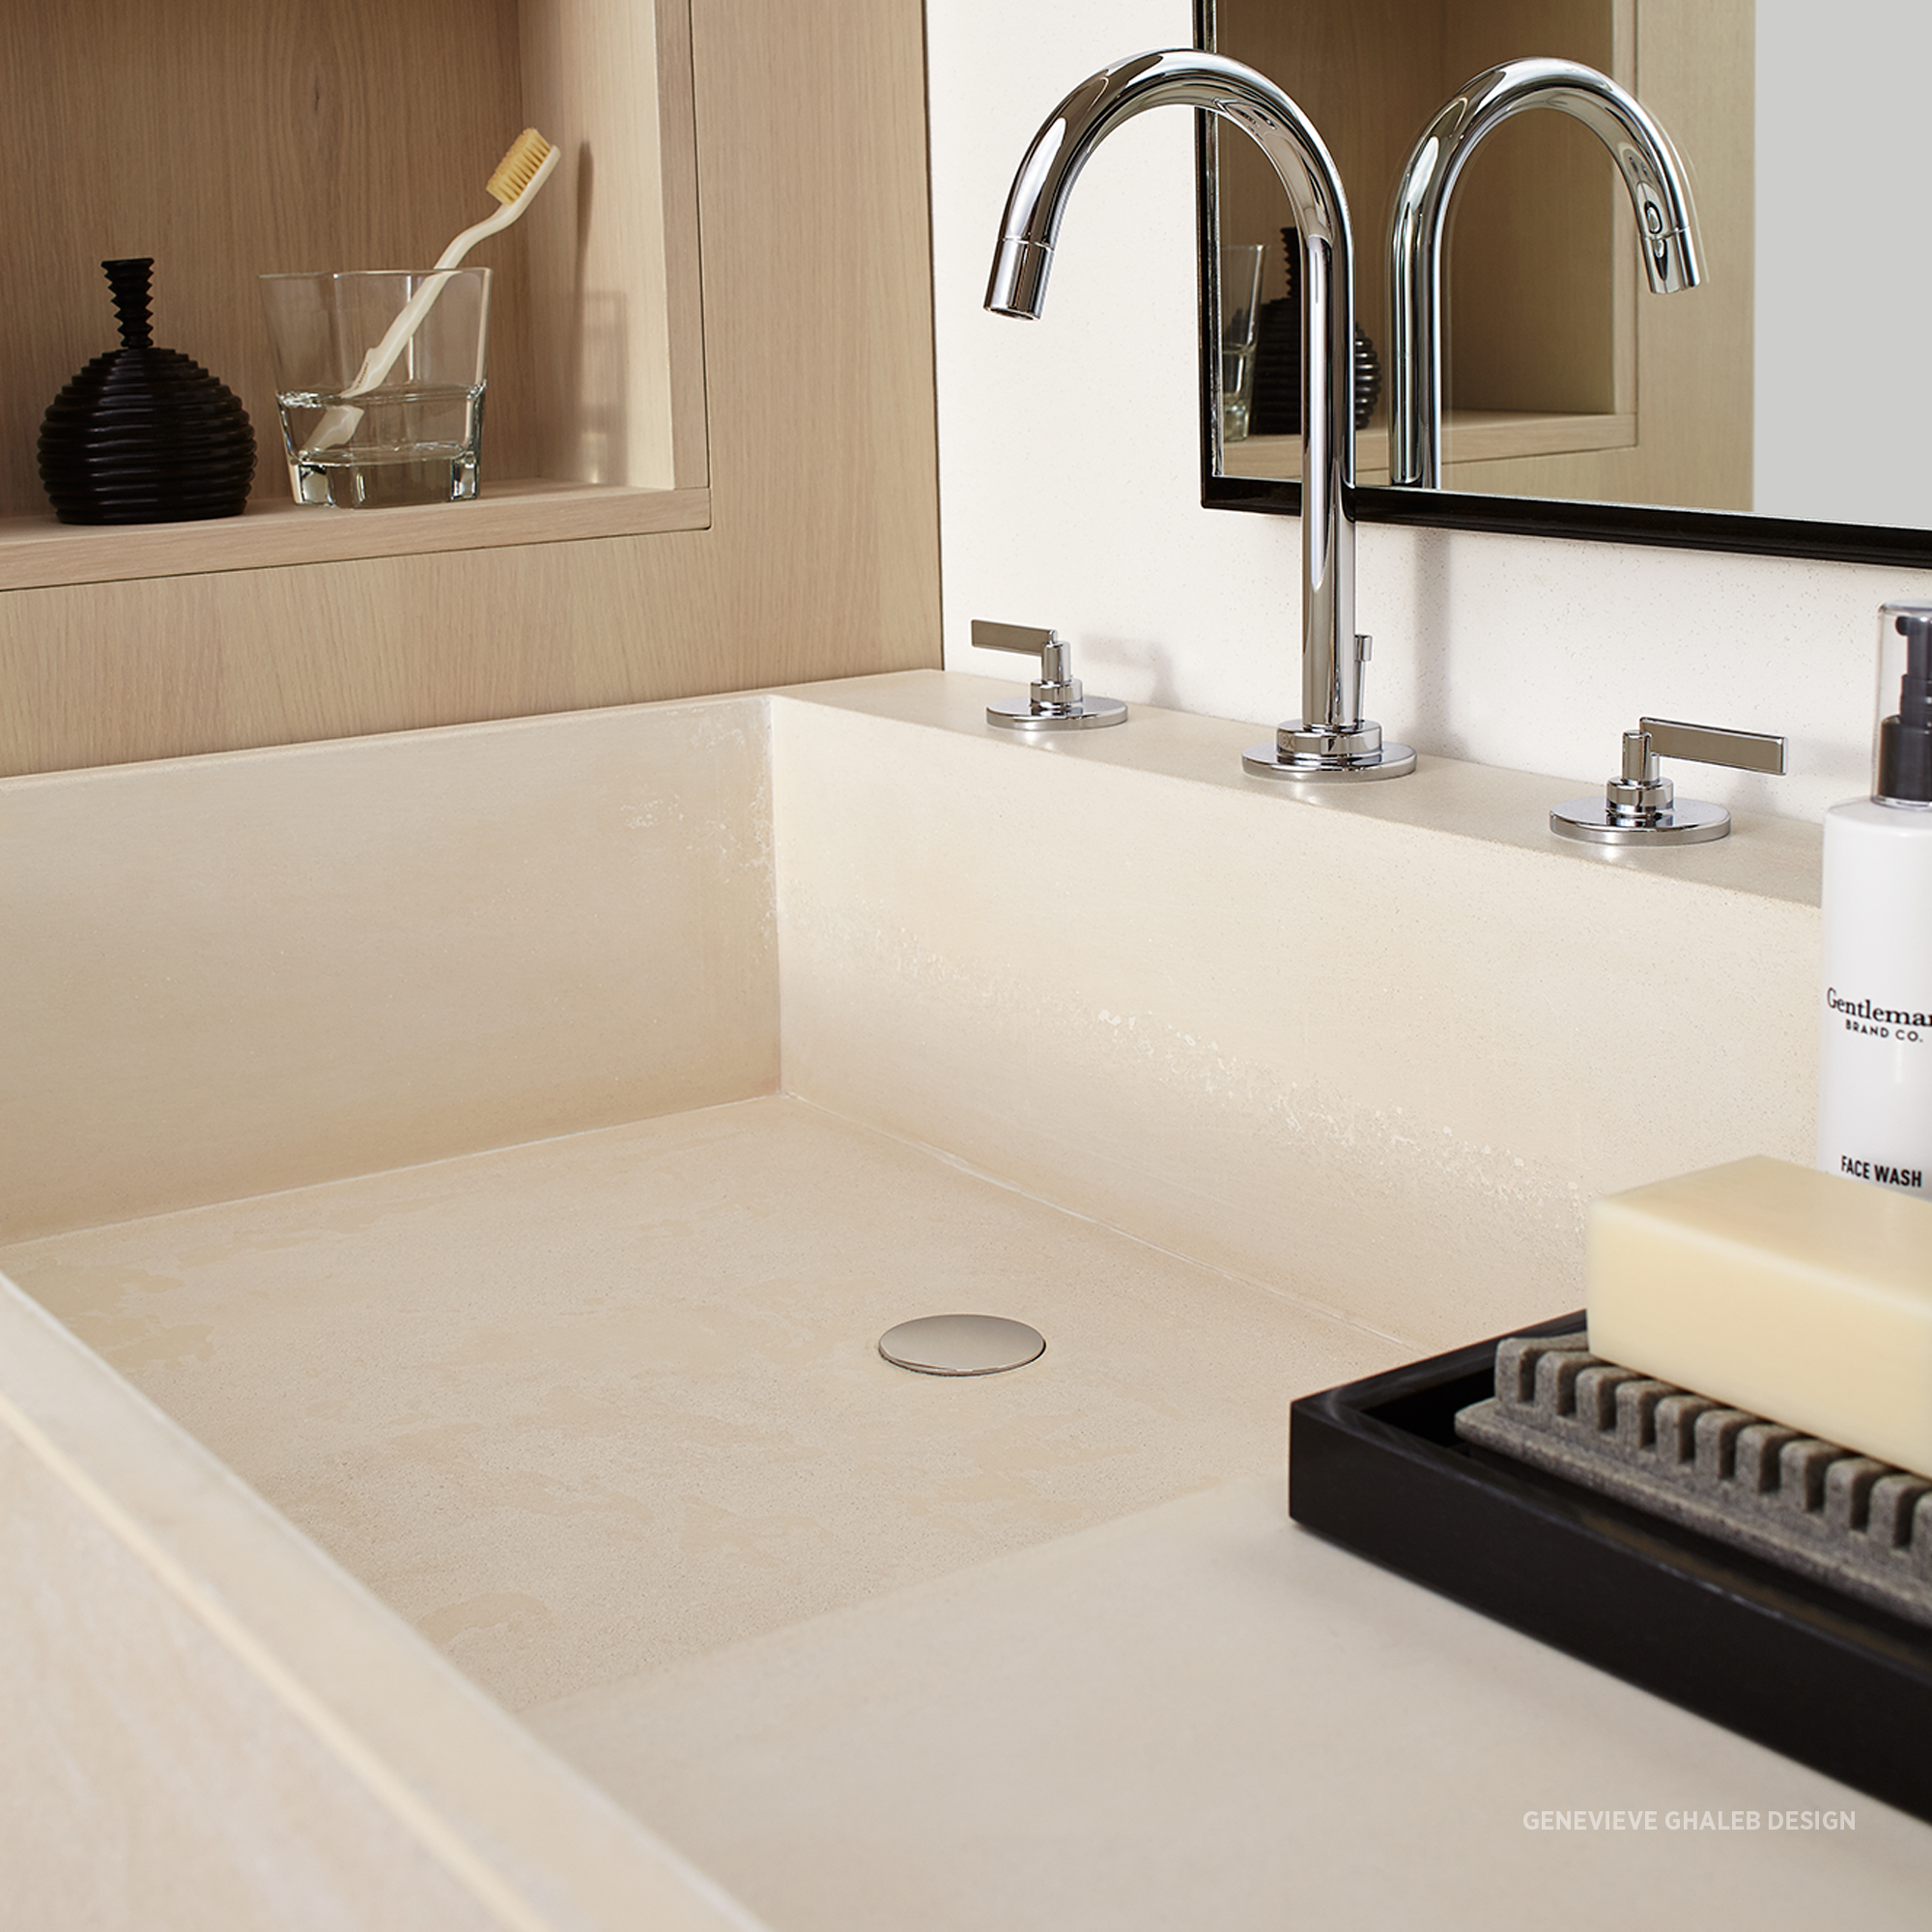 Percy 2-Handle Widespread Bathroom Faucet with Lever Handles